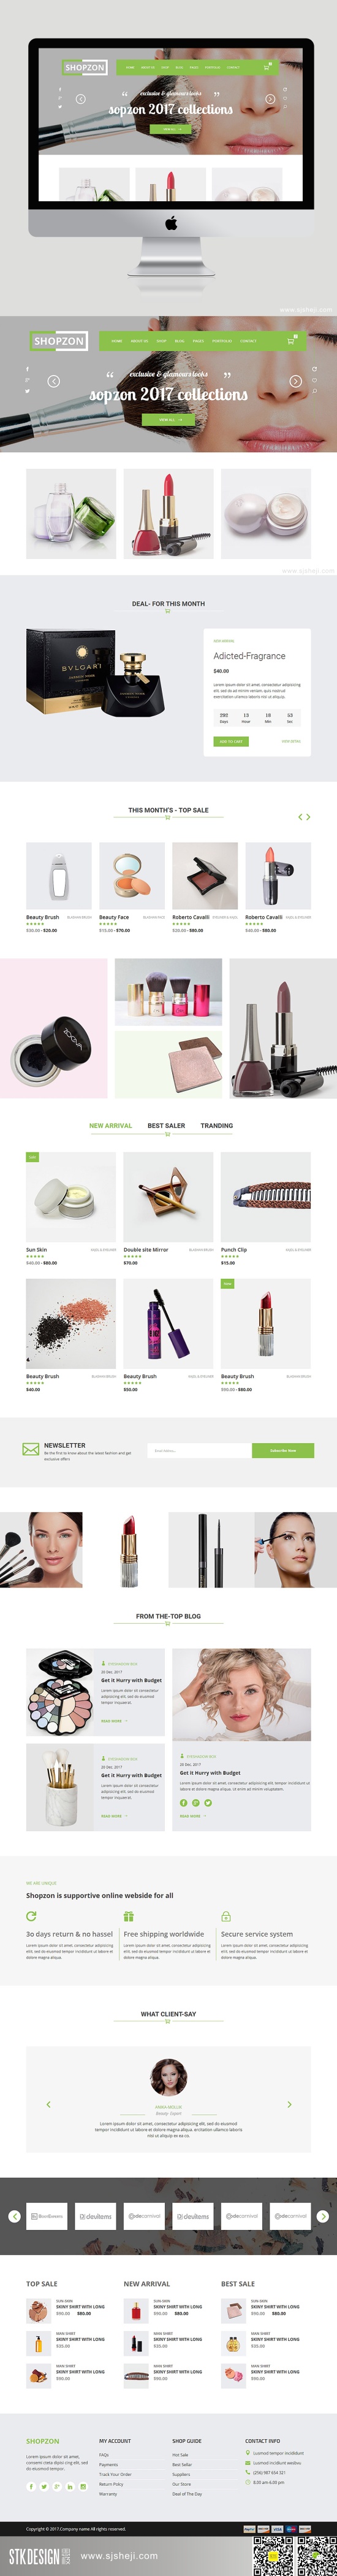 SHOPZON化妆品网页设计